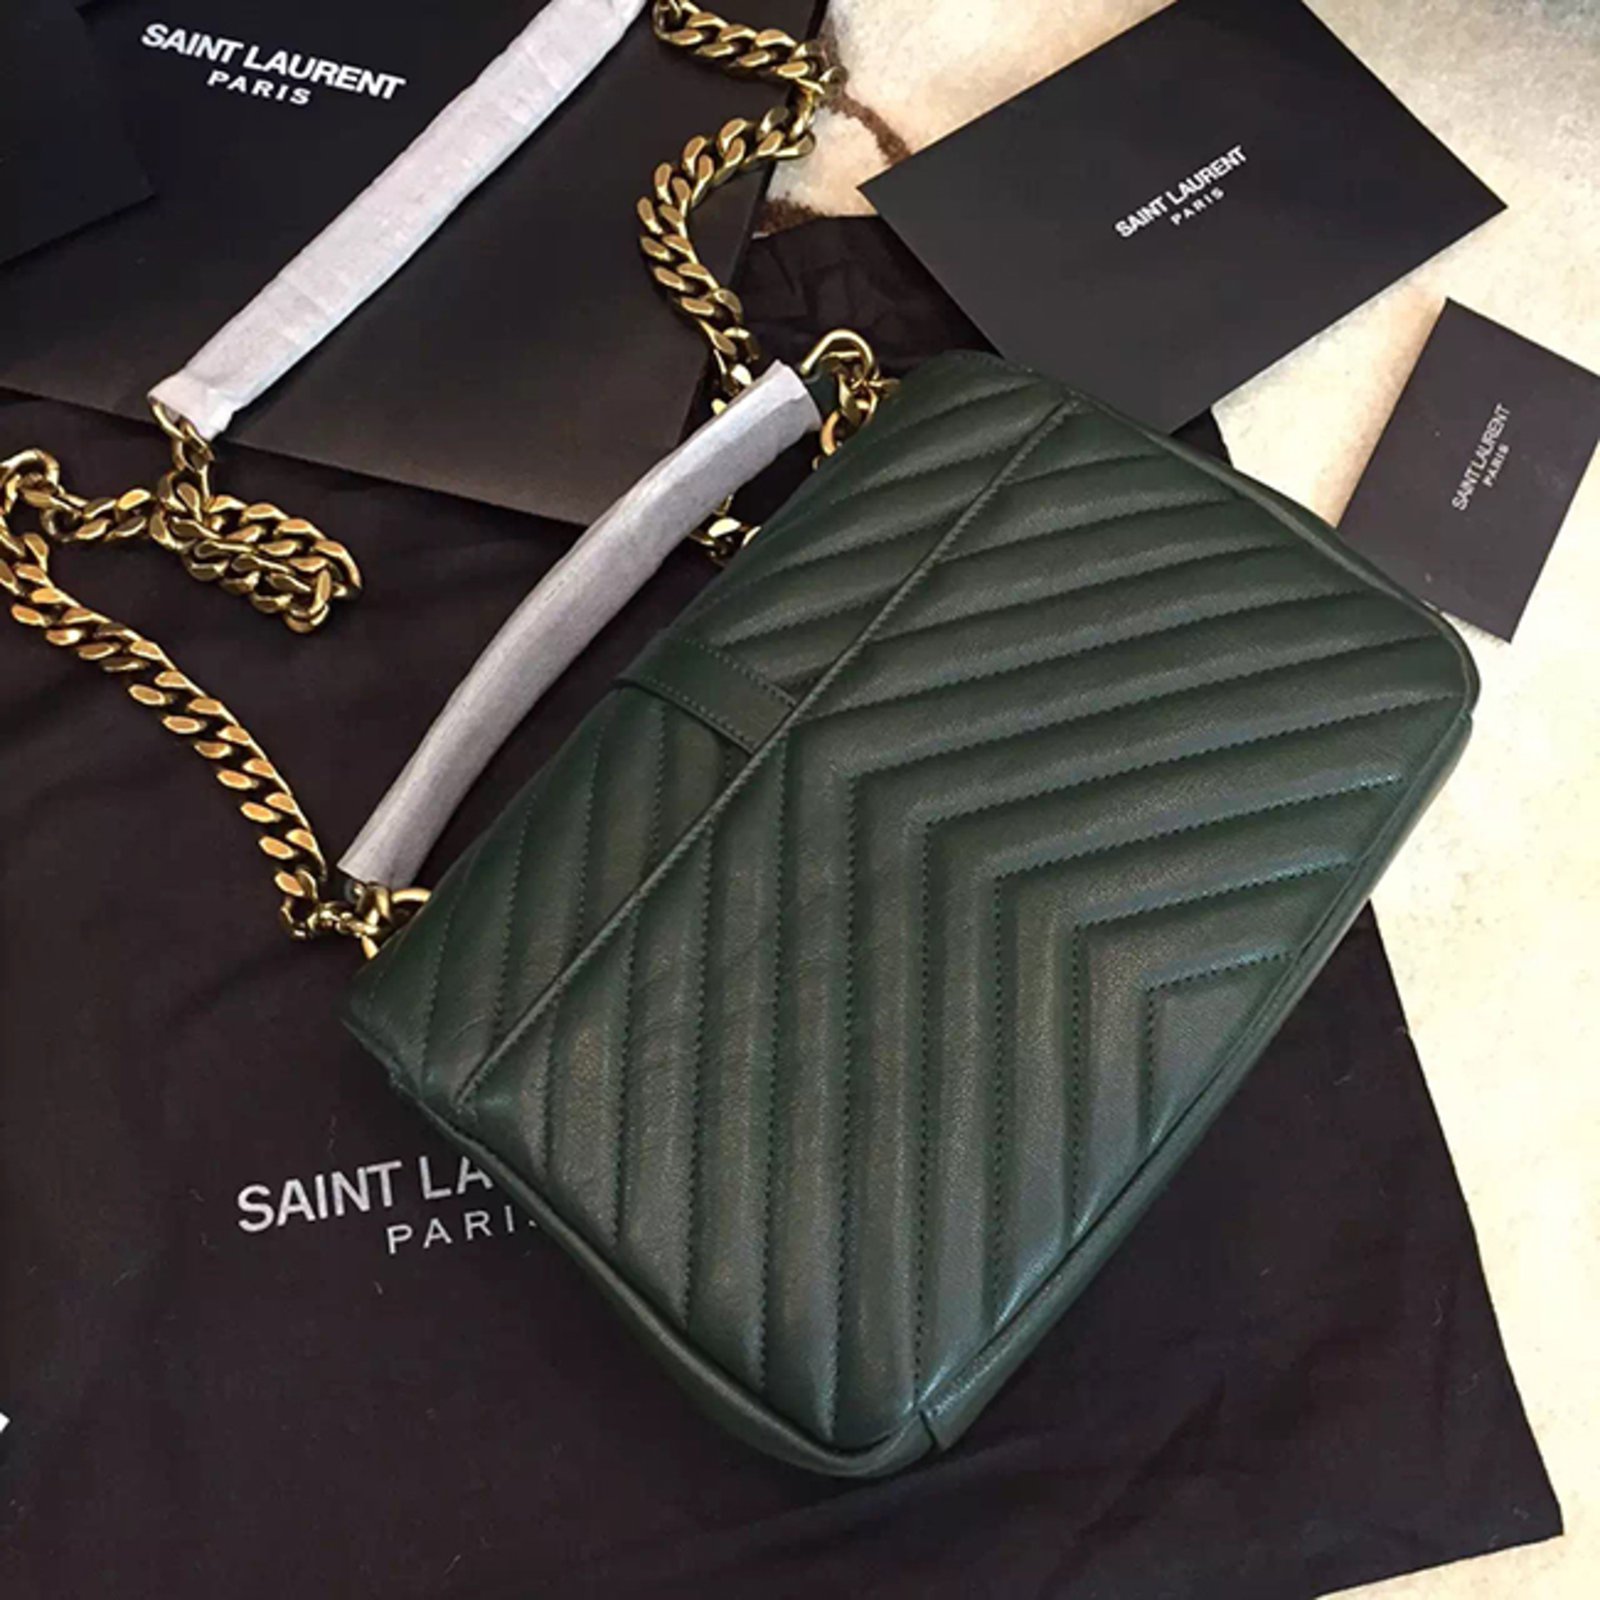 SAINT LAURENT Medium College Bag in Seaweed Green Leather